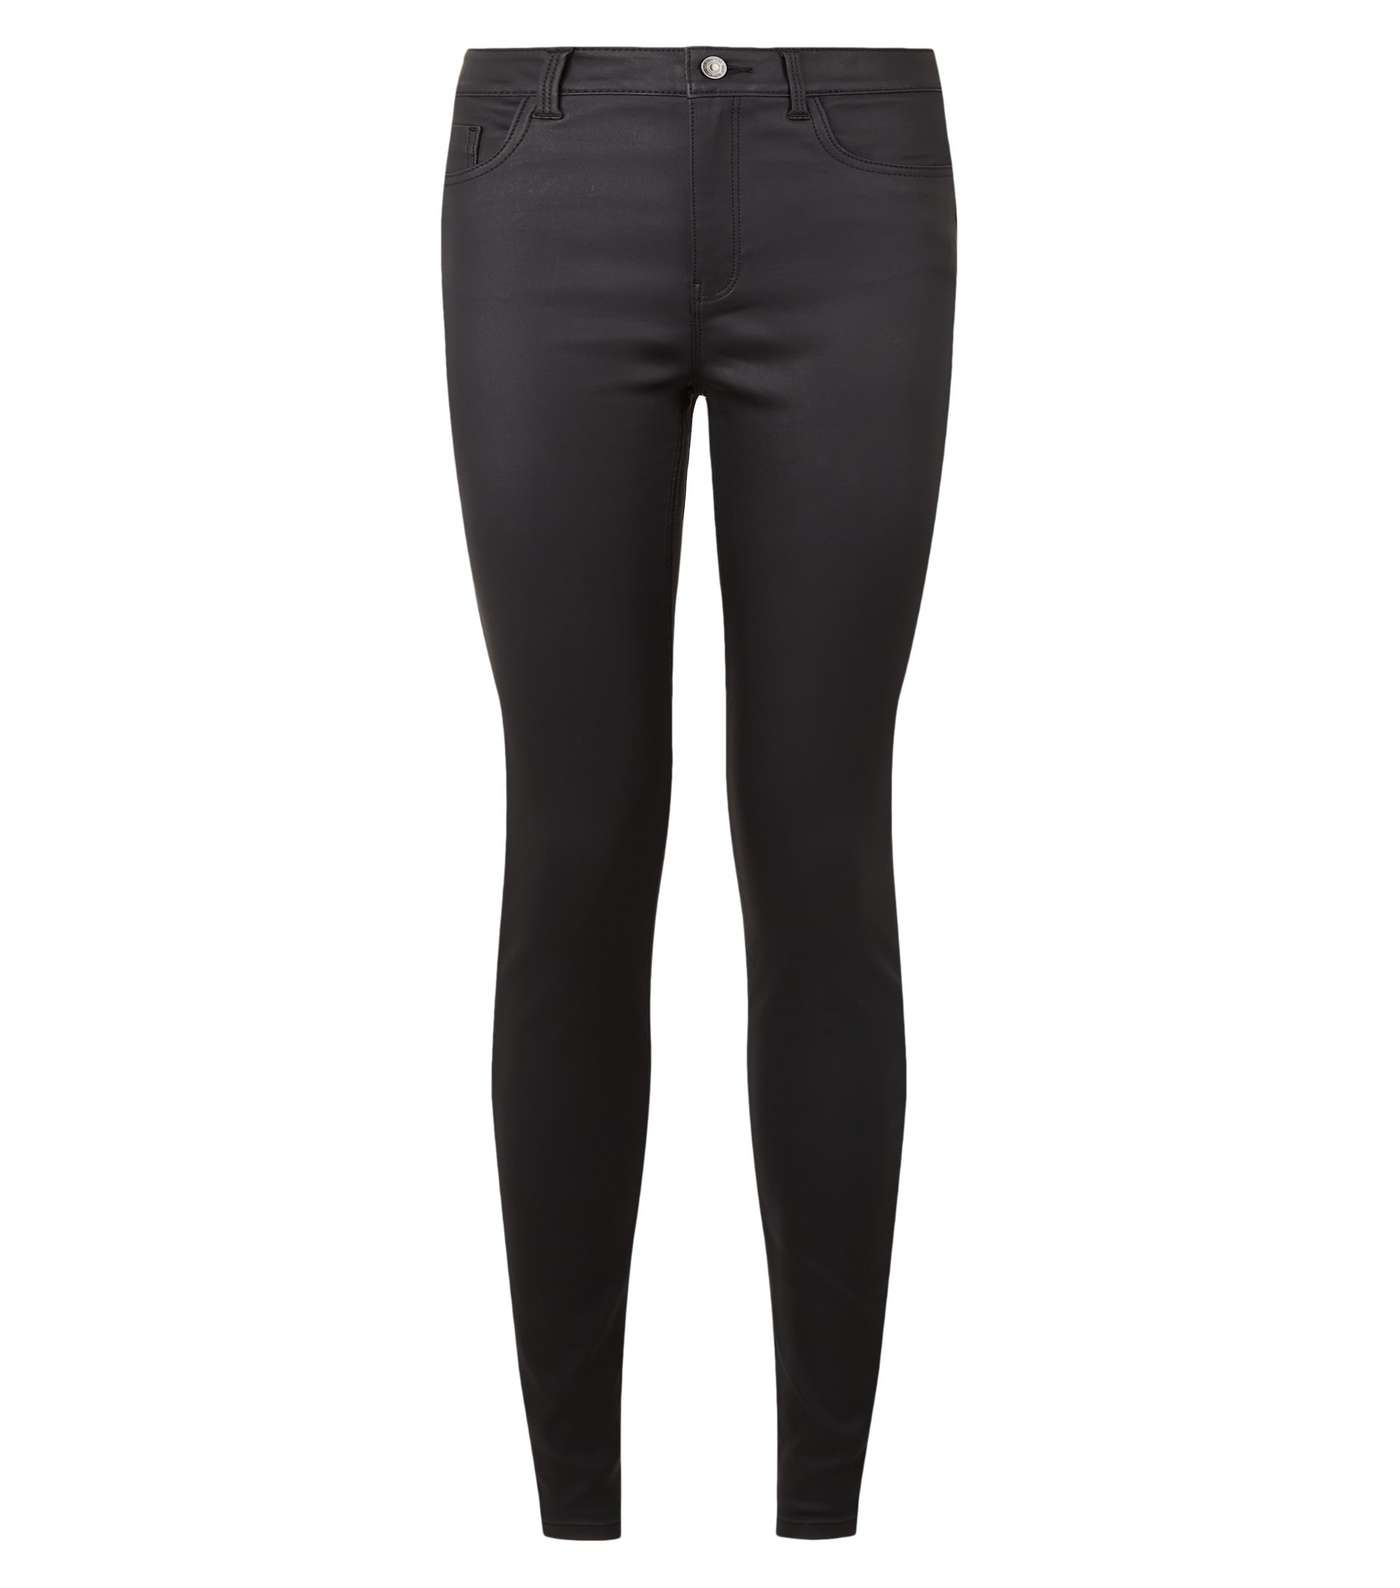 Tall Black Leather-Look 'Lift & Shape' Jenna Skinny Jeans Image 5